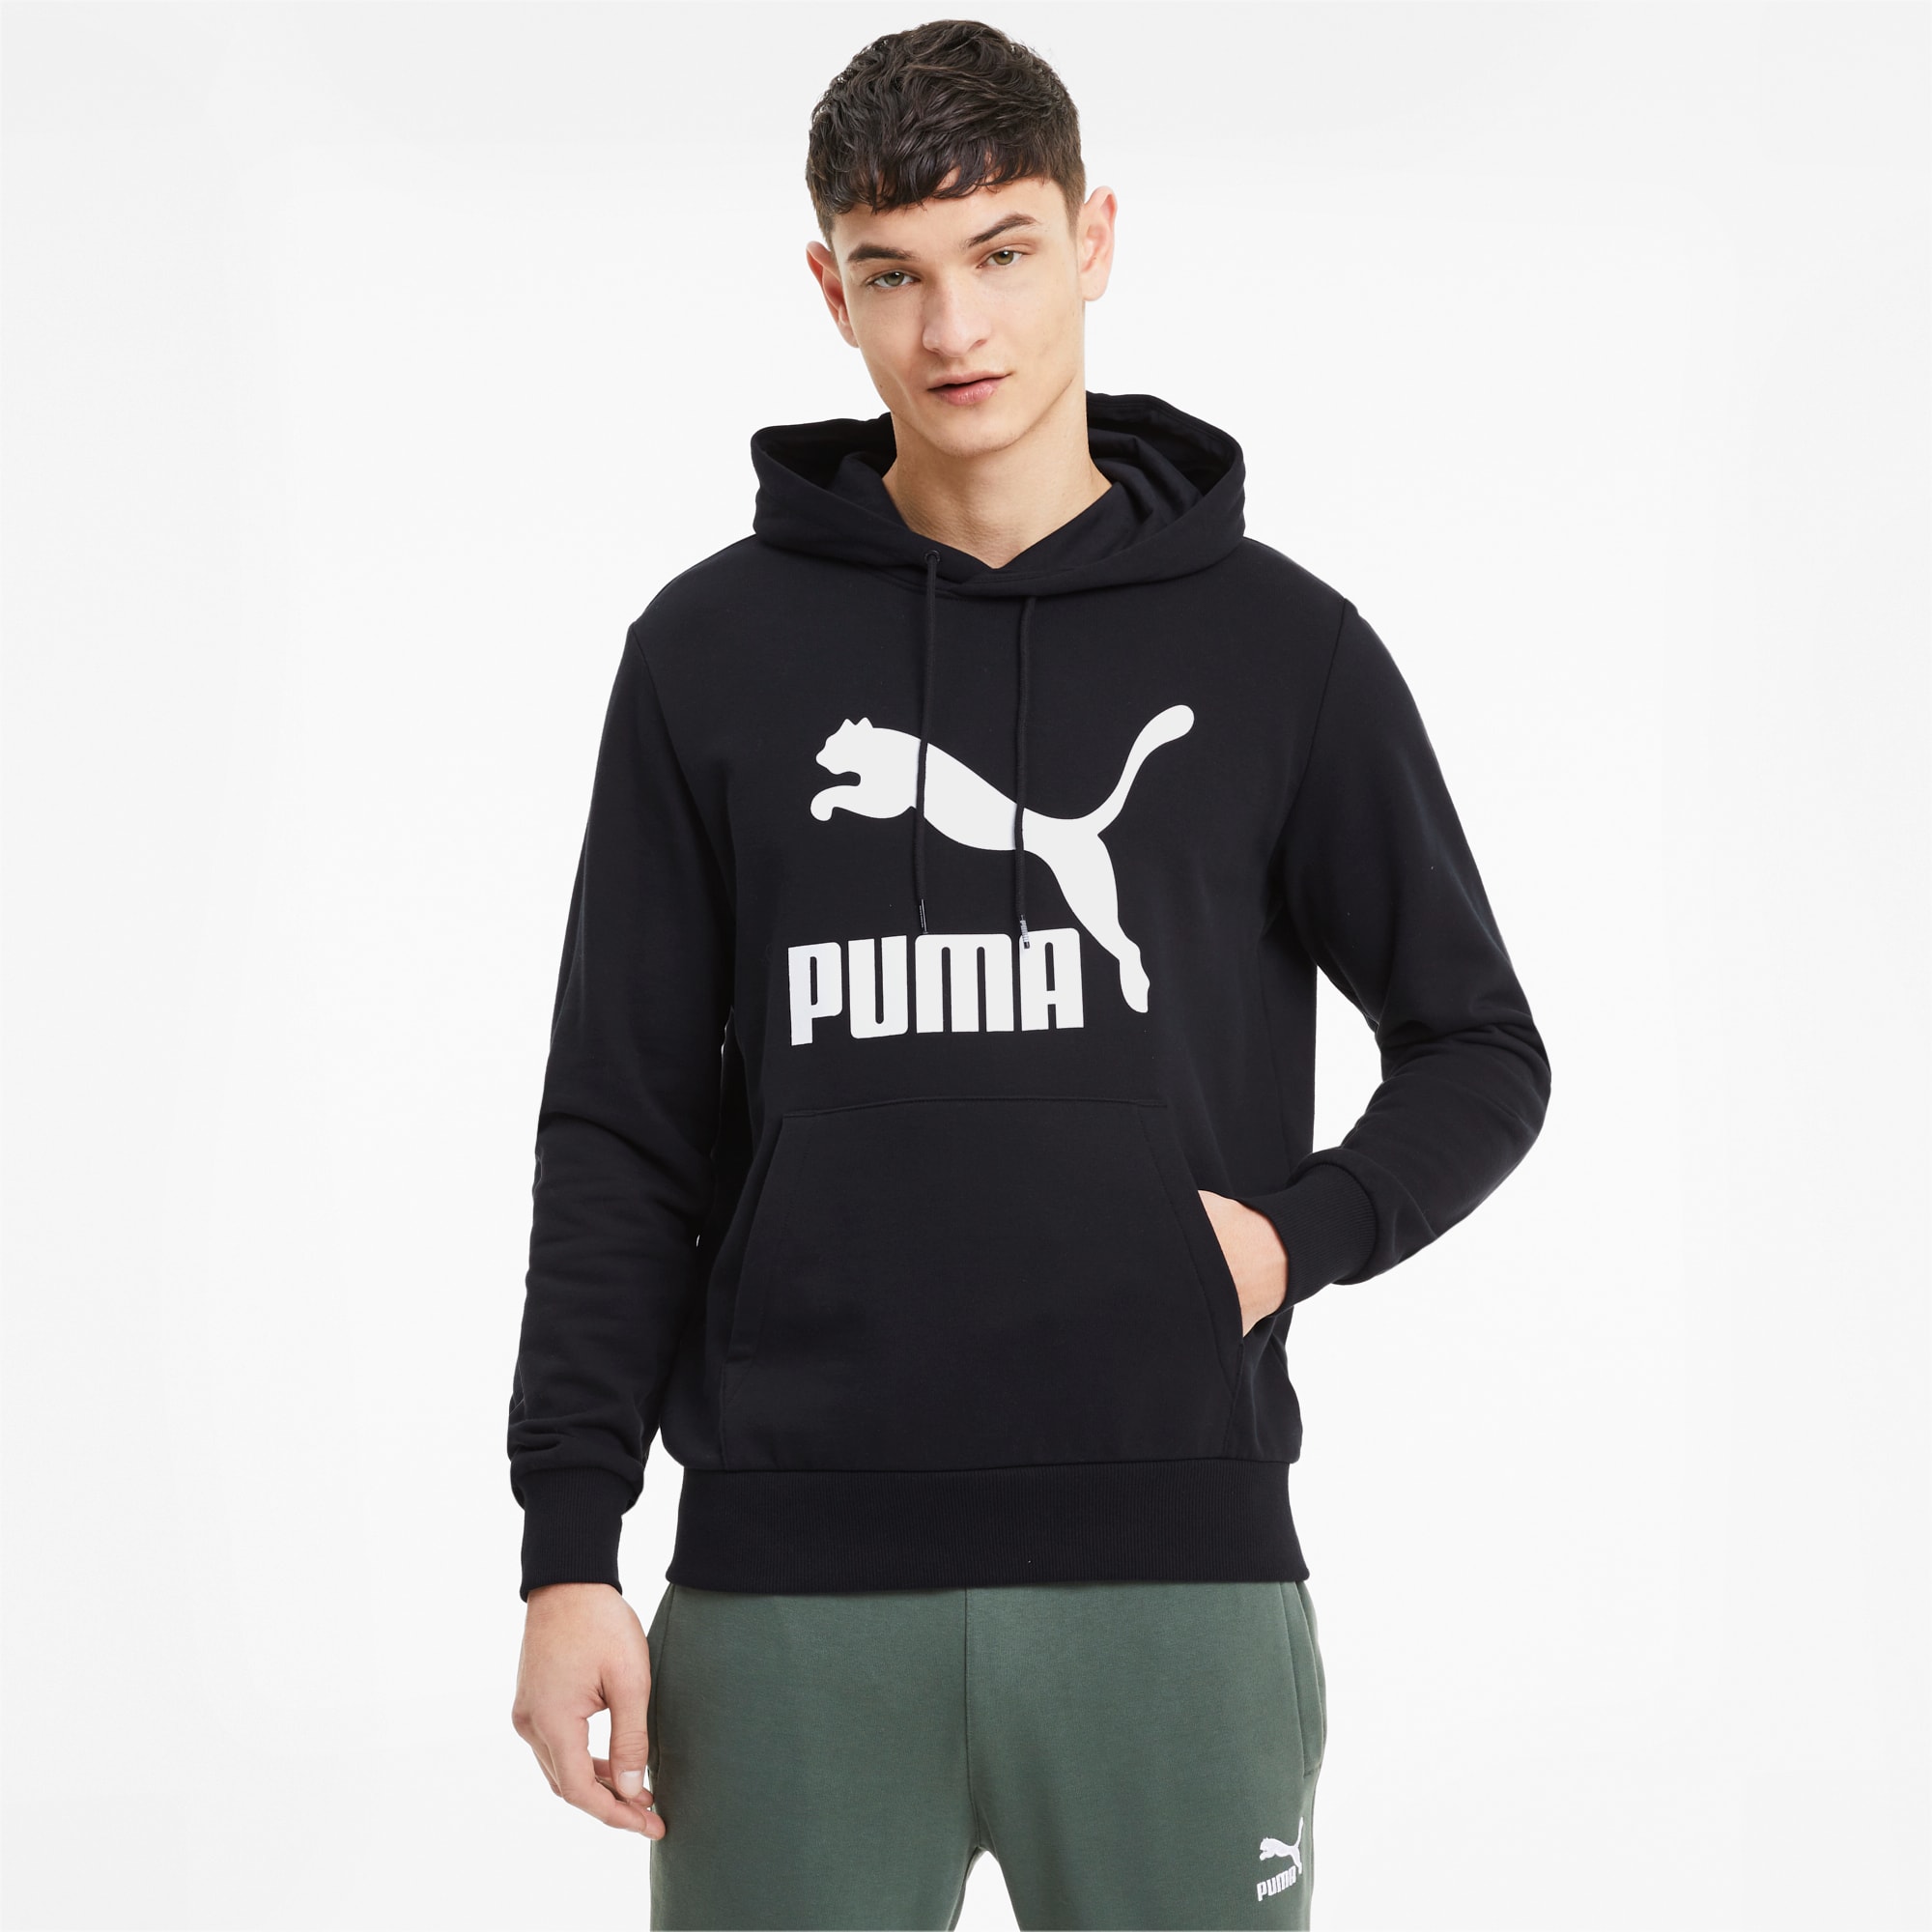 puma grey archive logo printed hooded sweatshirt